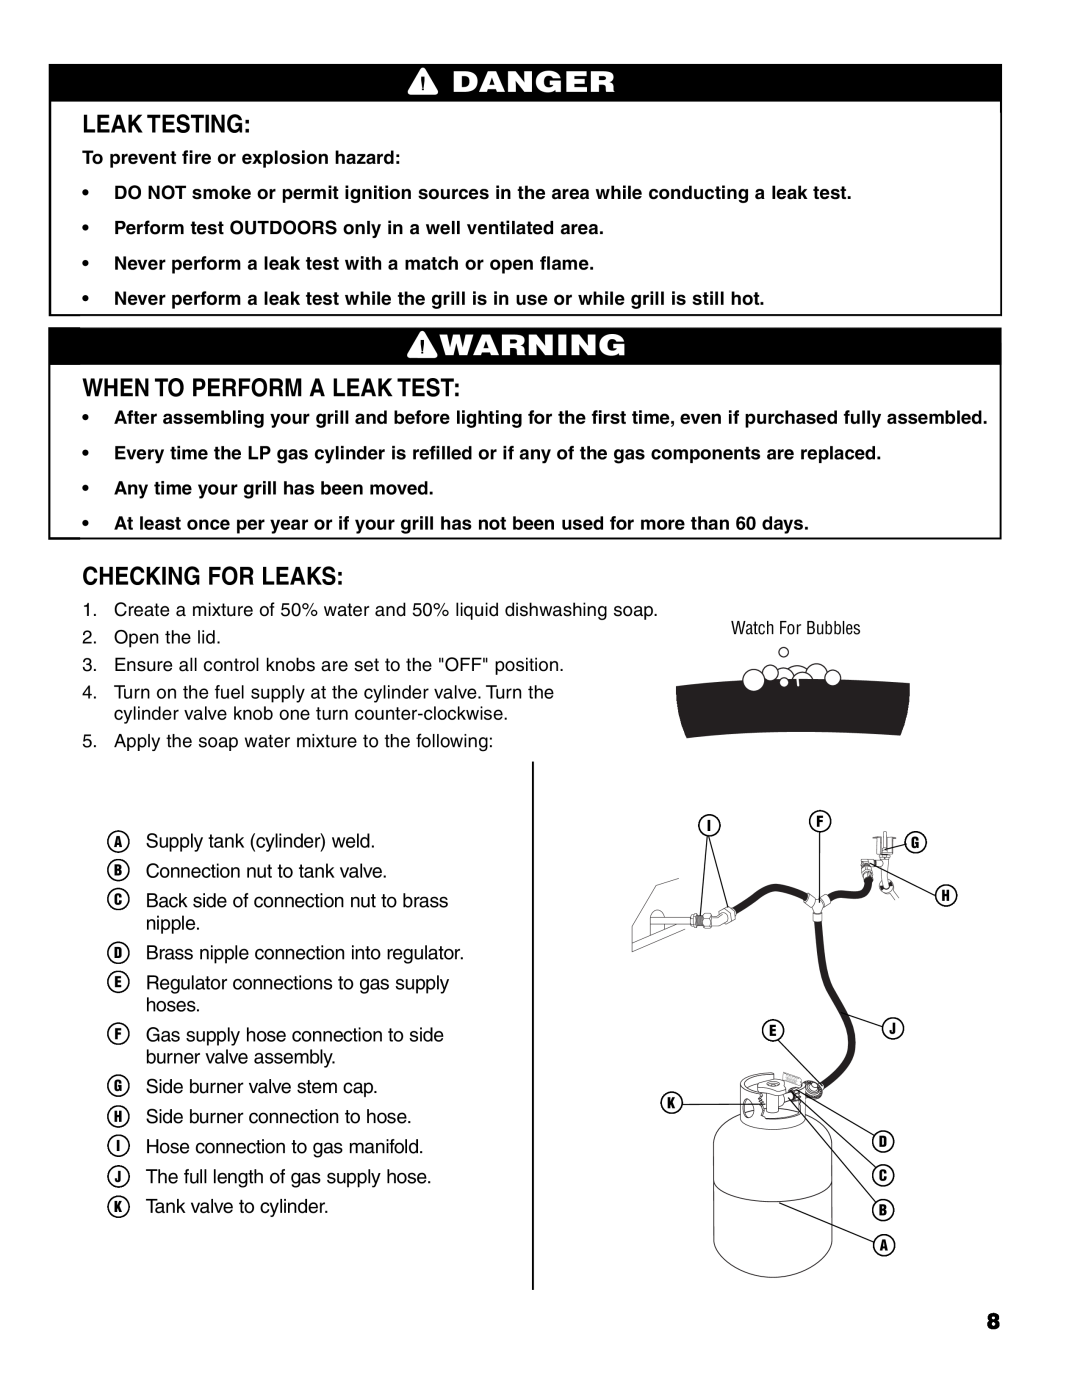 Brinkmann 7541 Series owner manual Leak Testing, When To Perform A Leak Test, Checking For Leaks, Danger 